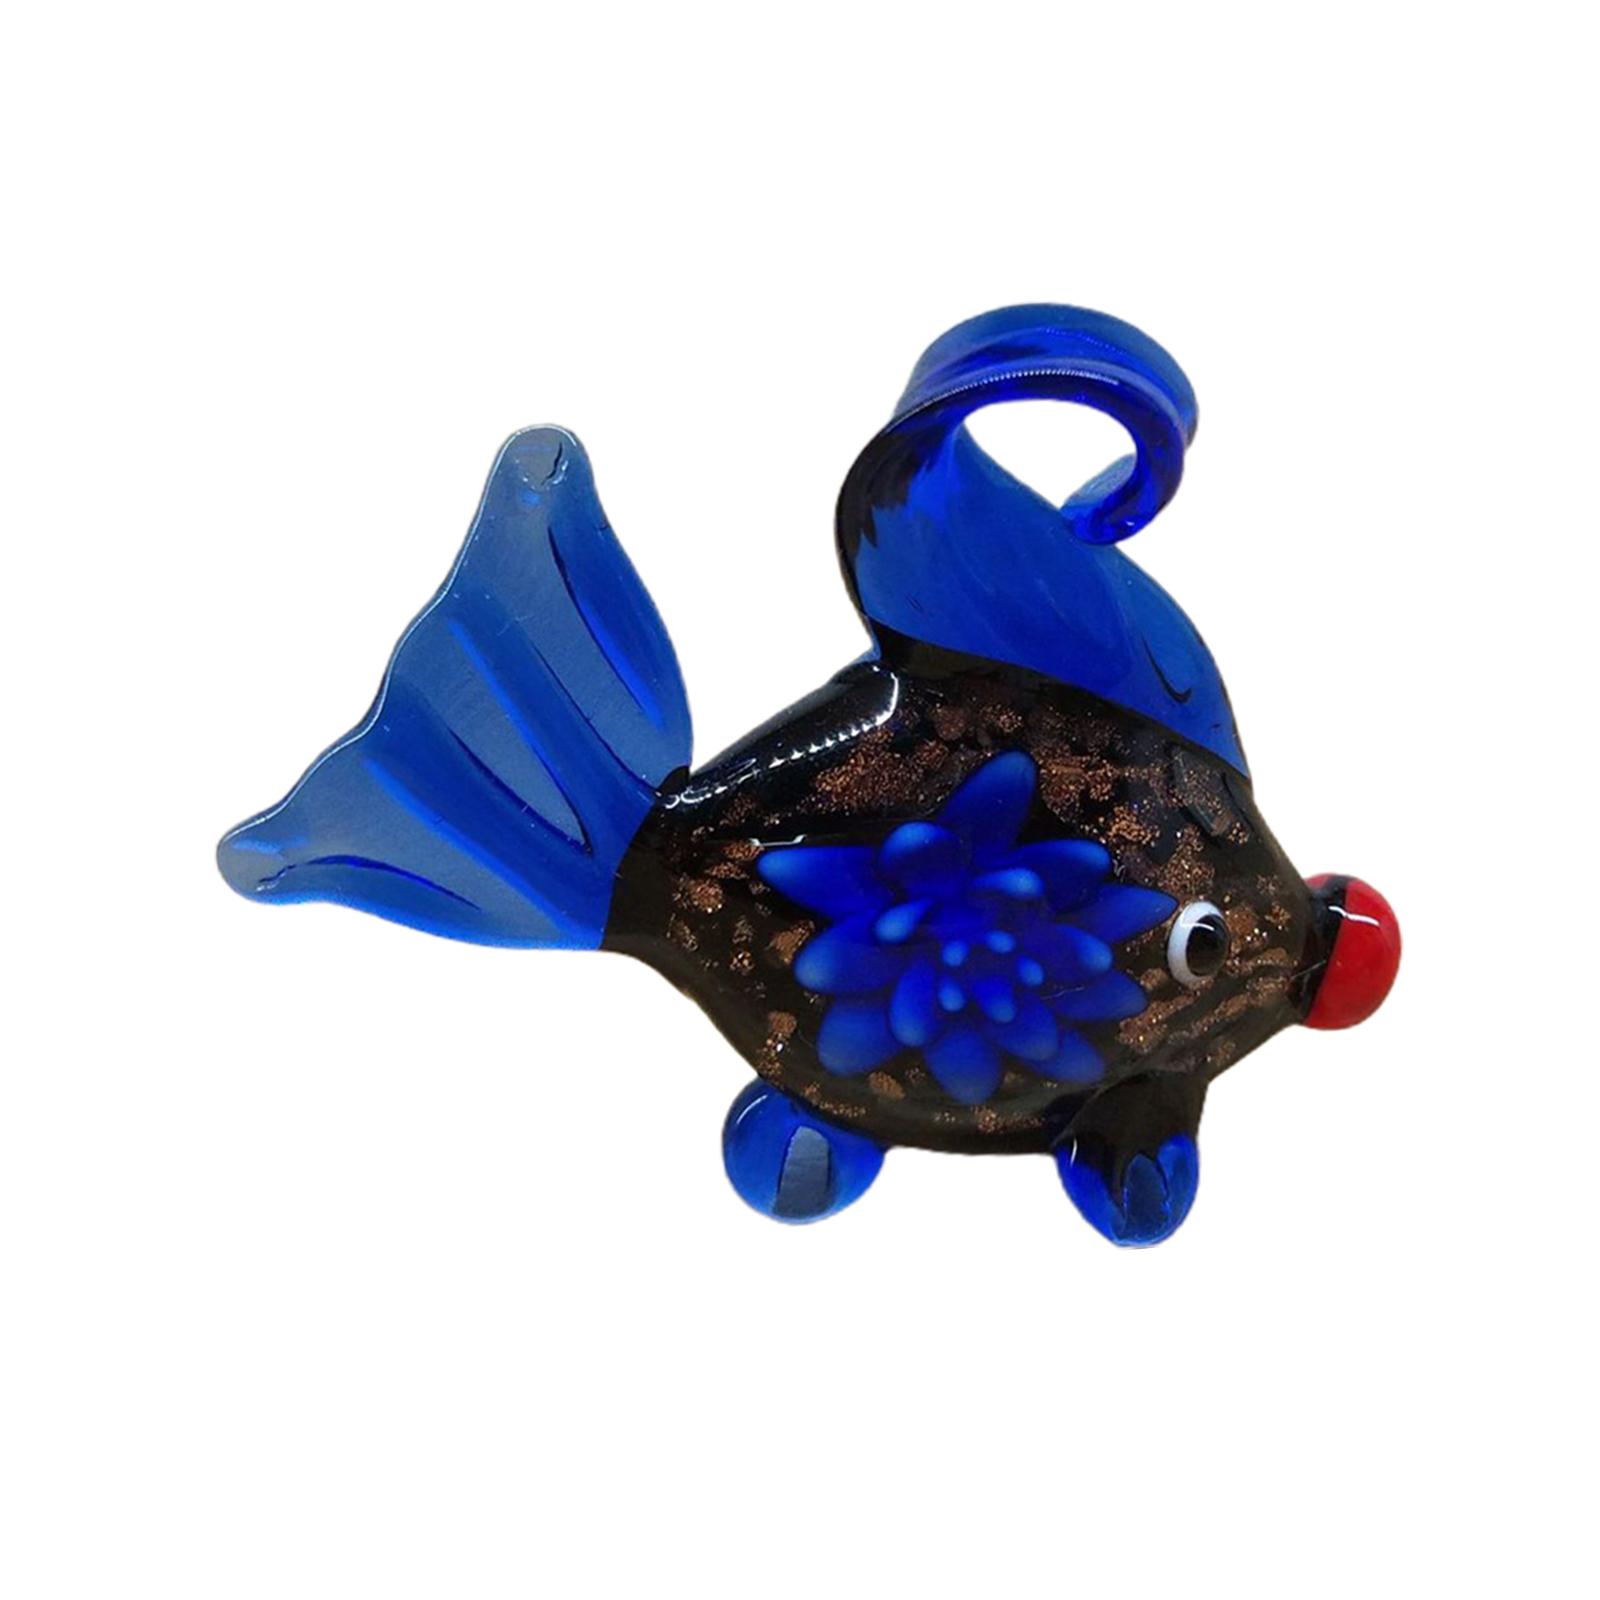 Fish Ornament Landscape Supplies Fish Tank Craft Creative Decorations Blue